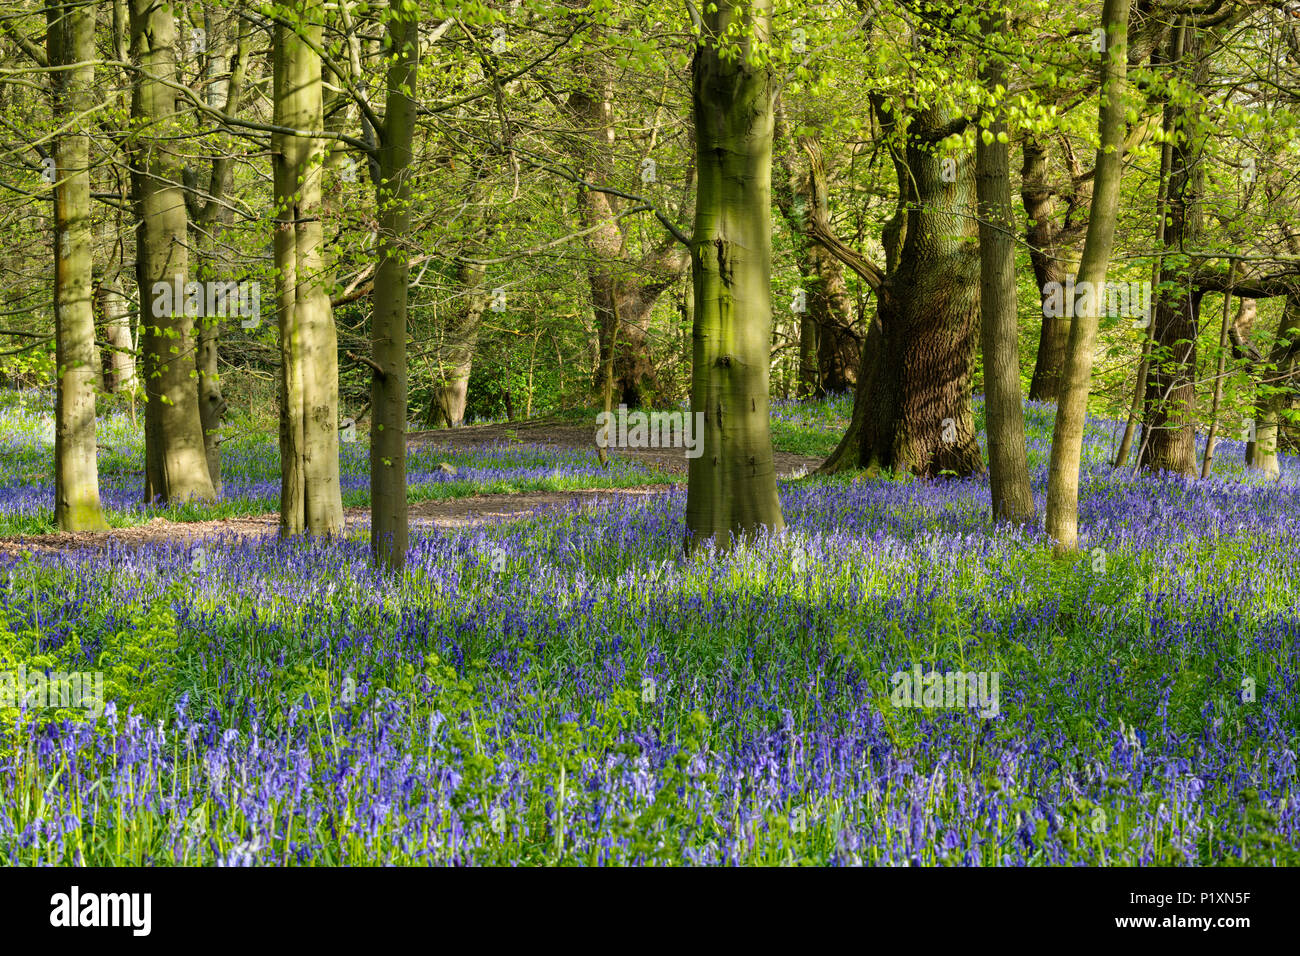 Dappled sunlight, windy path, beautiful colourful blue carpet of flowering bluebells & trees - Middleton Woods, Ilkley, West Yorkshire, England, UK. Stock Photo